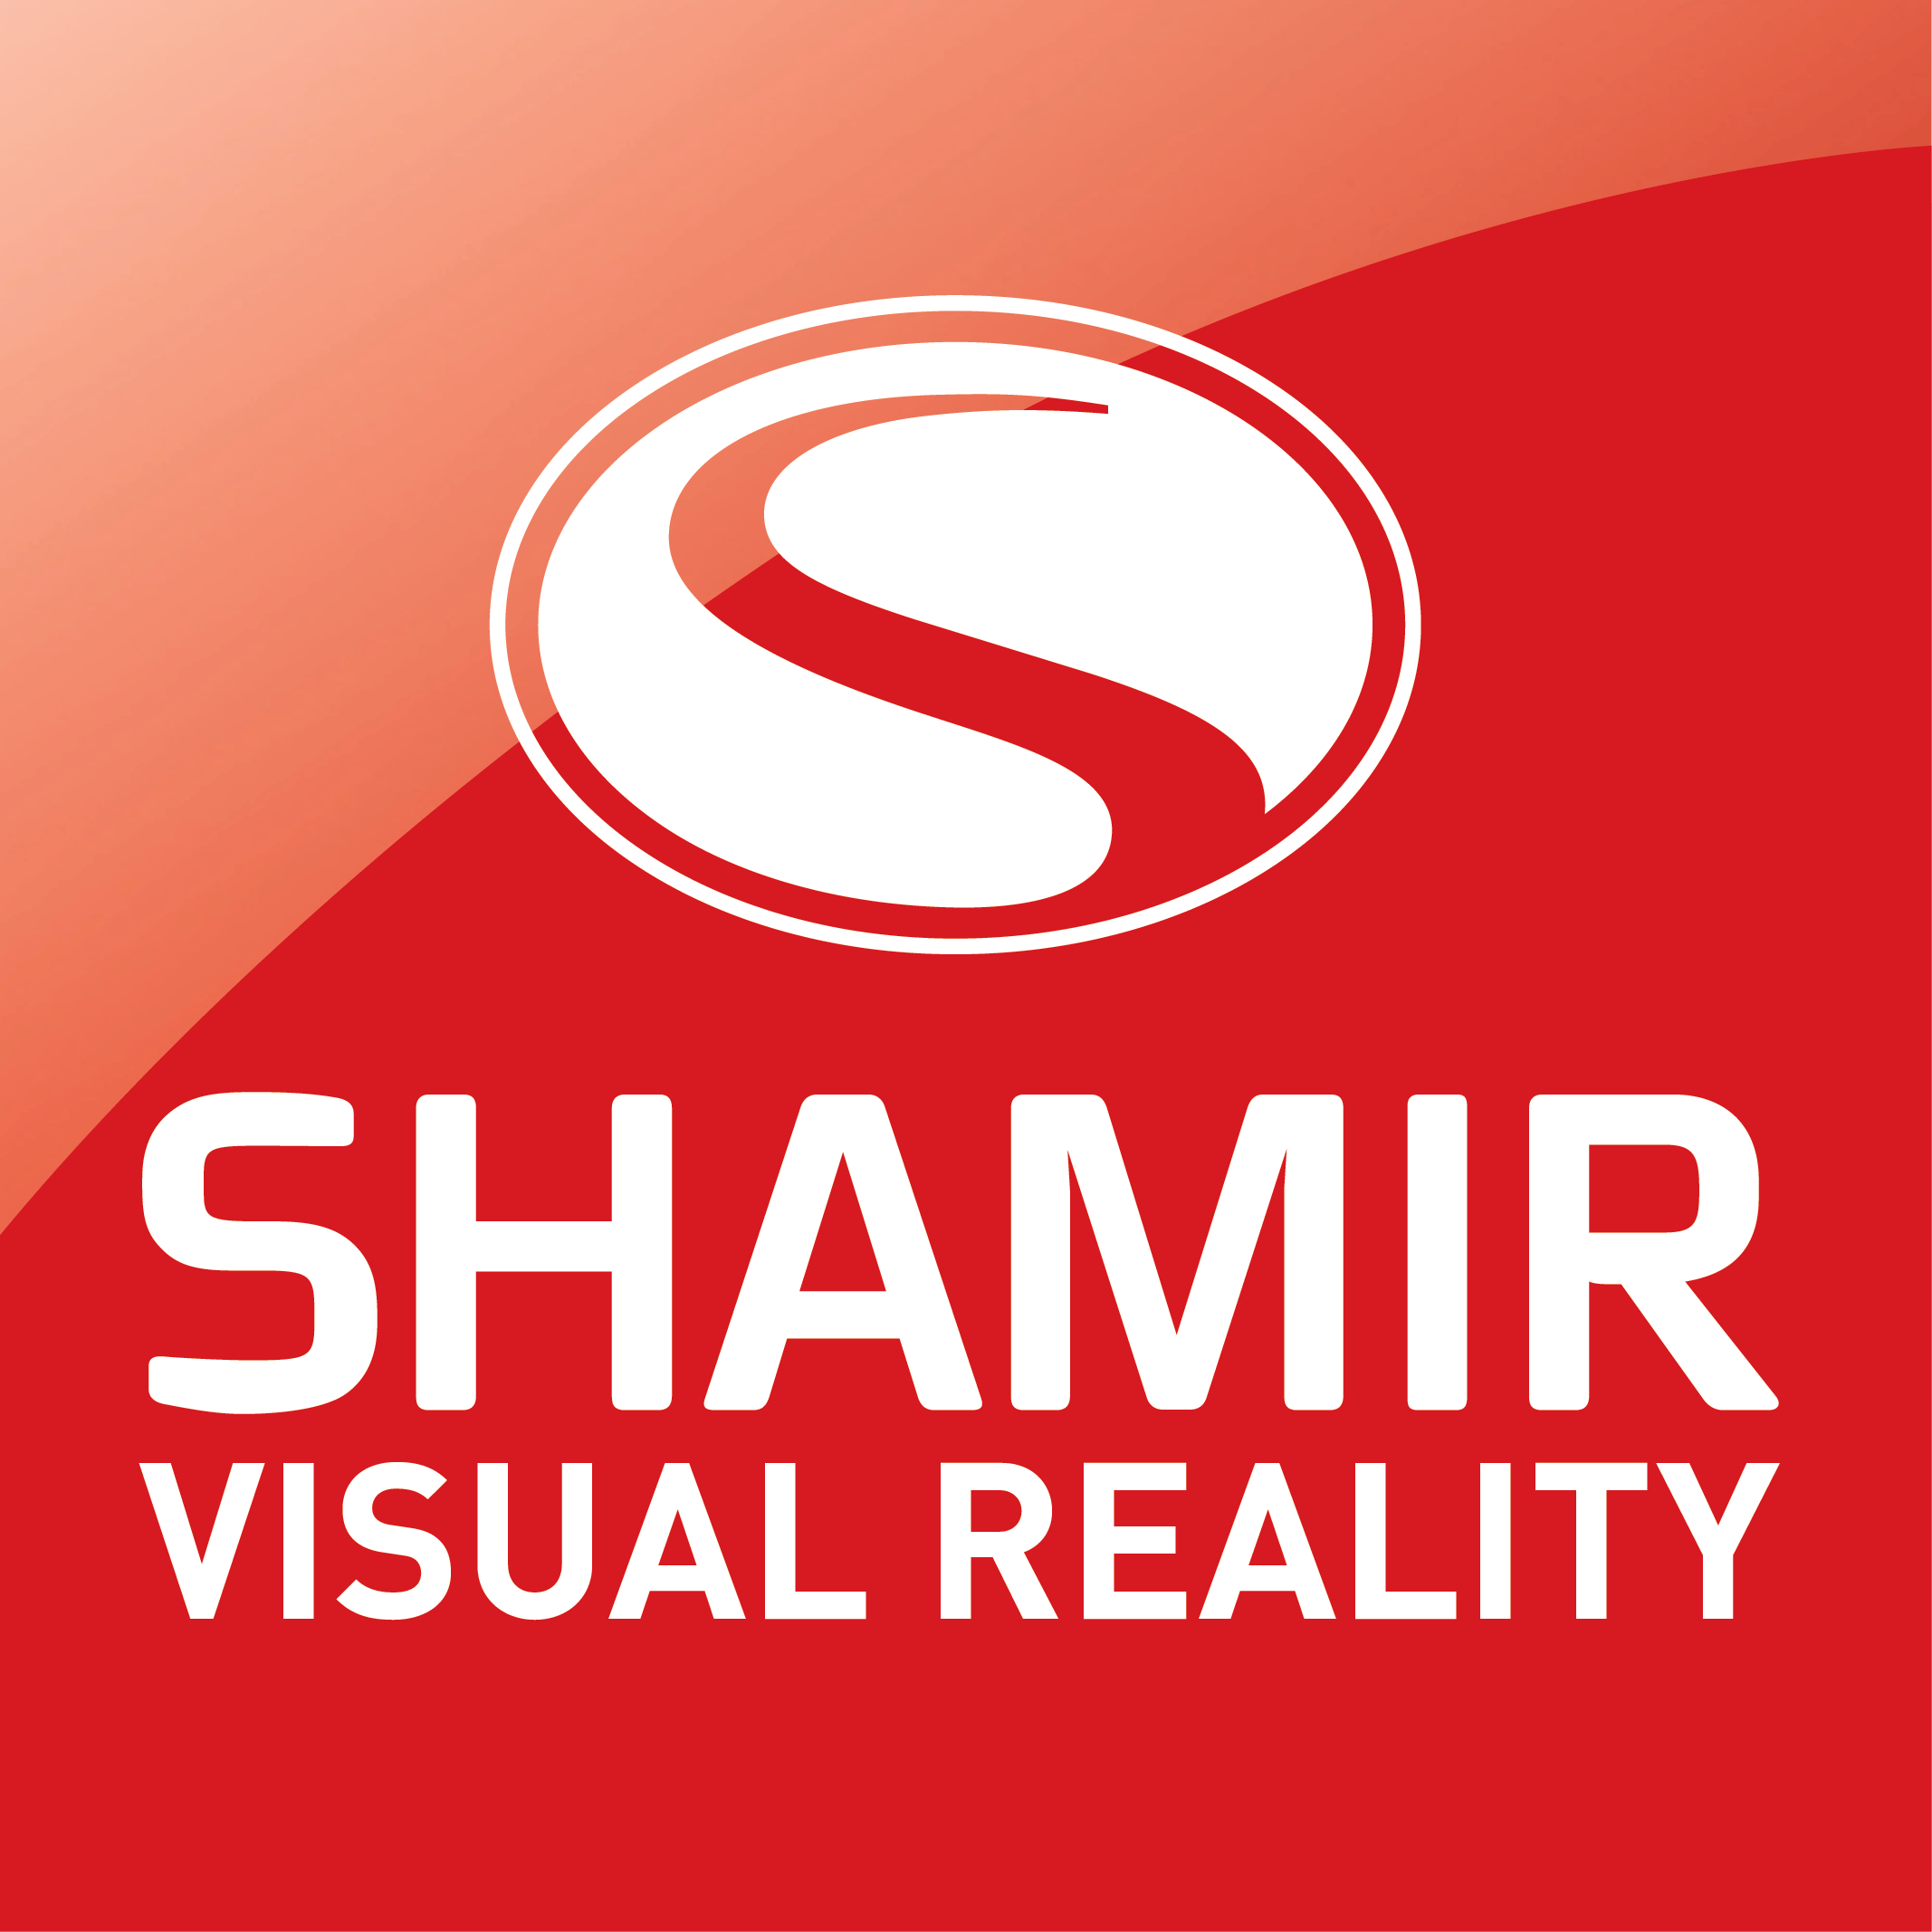 Lens.com Logo - Shamir Visual Reality and Augmented Reality